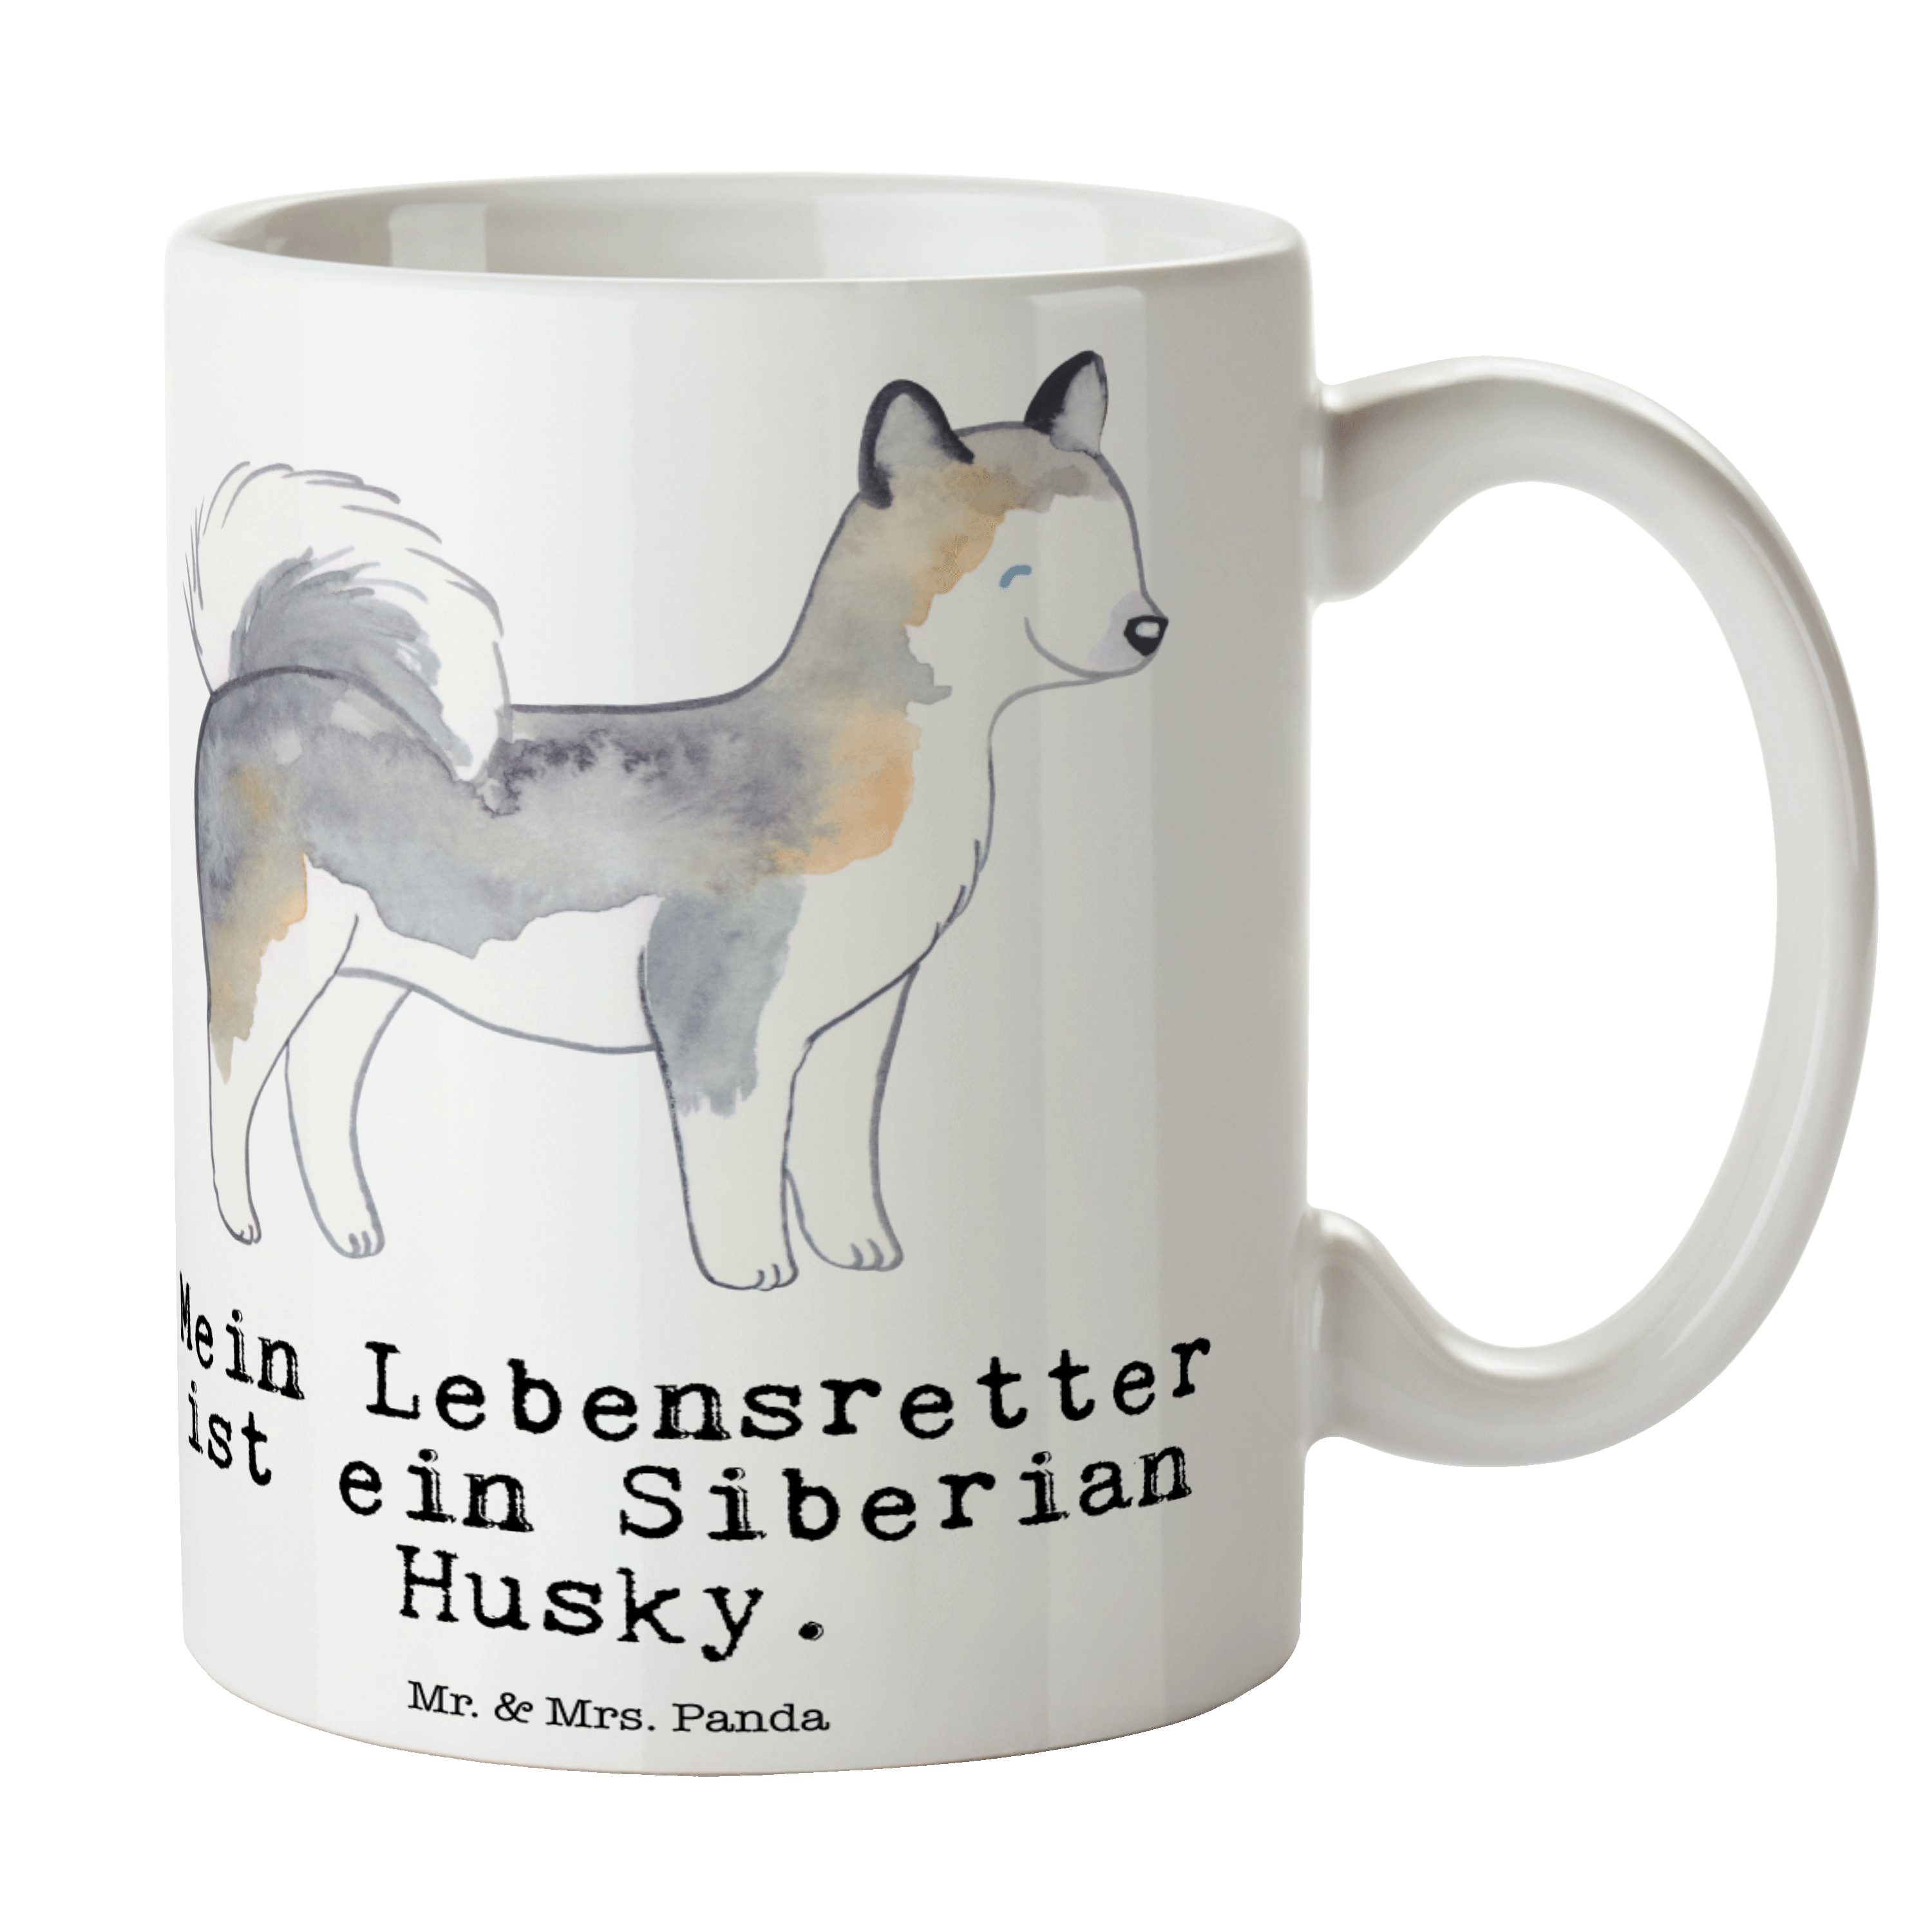 Mr. & Mrs. Panda Tasse Siberian Husky Lebensretter - Weiß - Geschenk, Tasse Motive, Kaffeebe, Keramik | Tassen